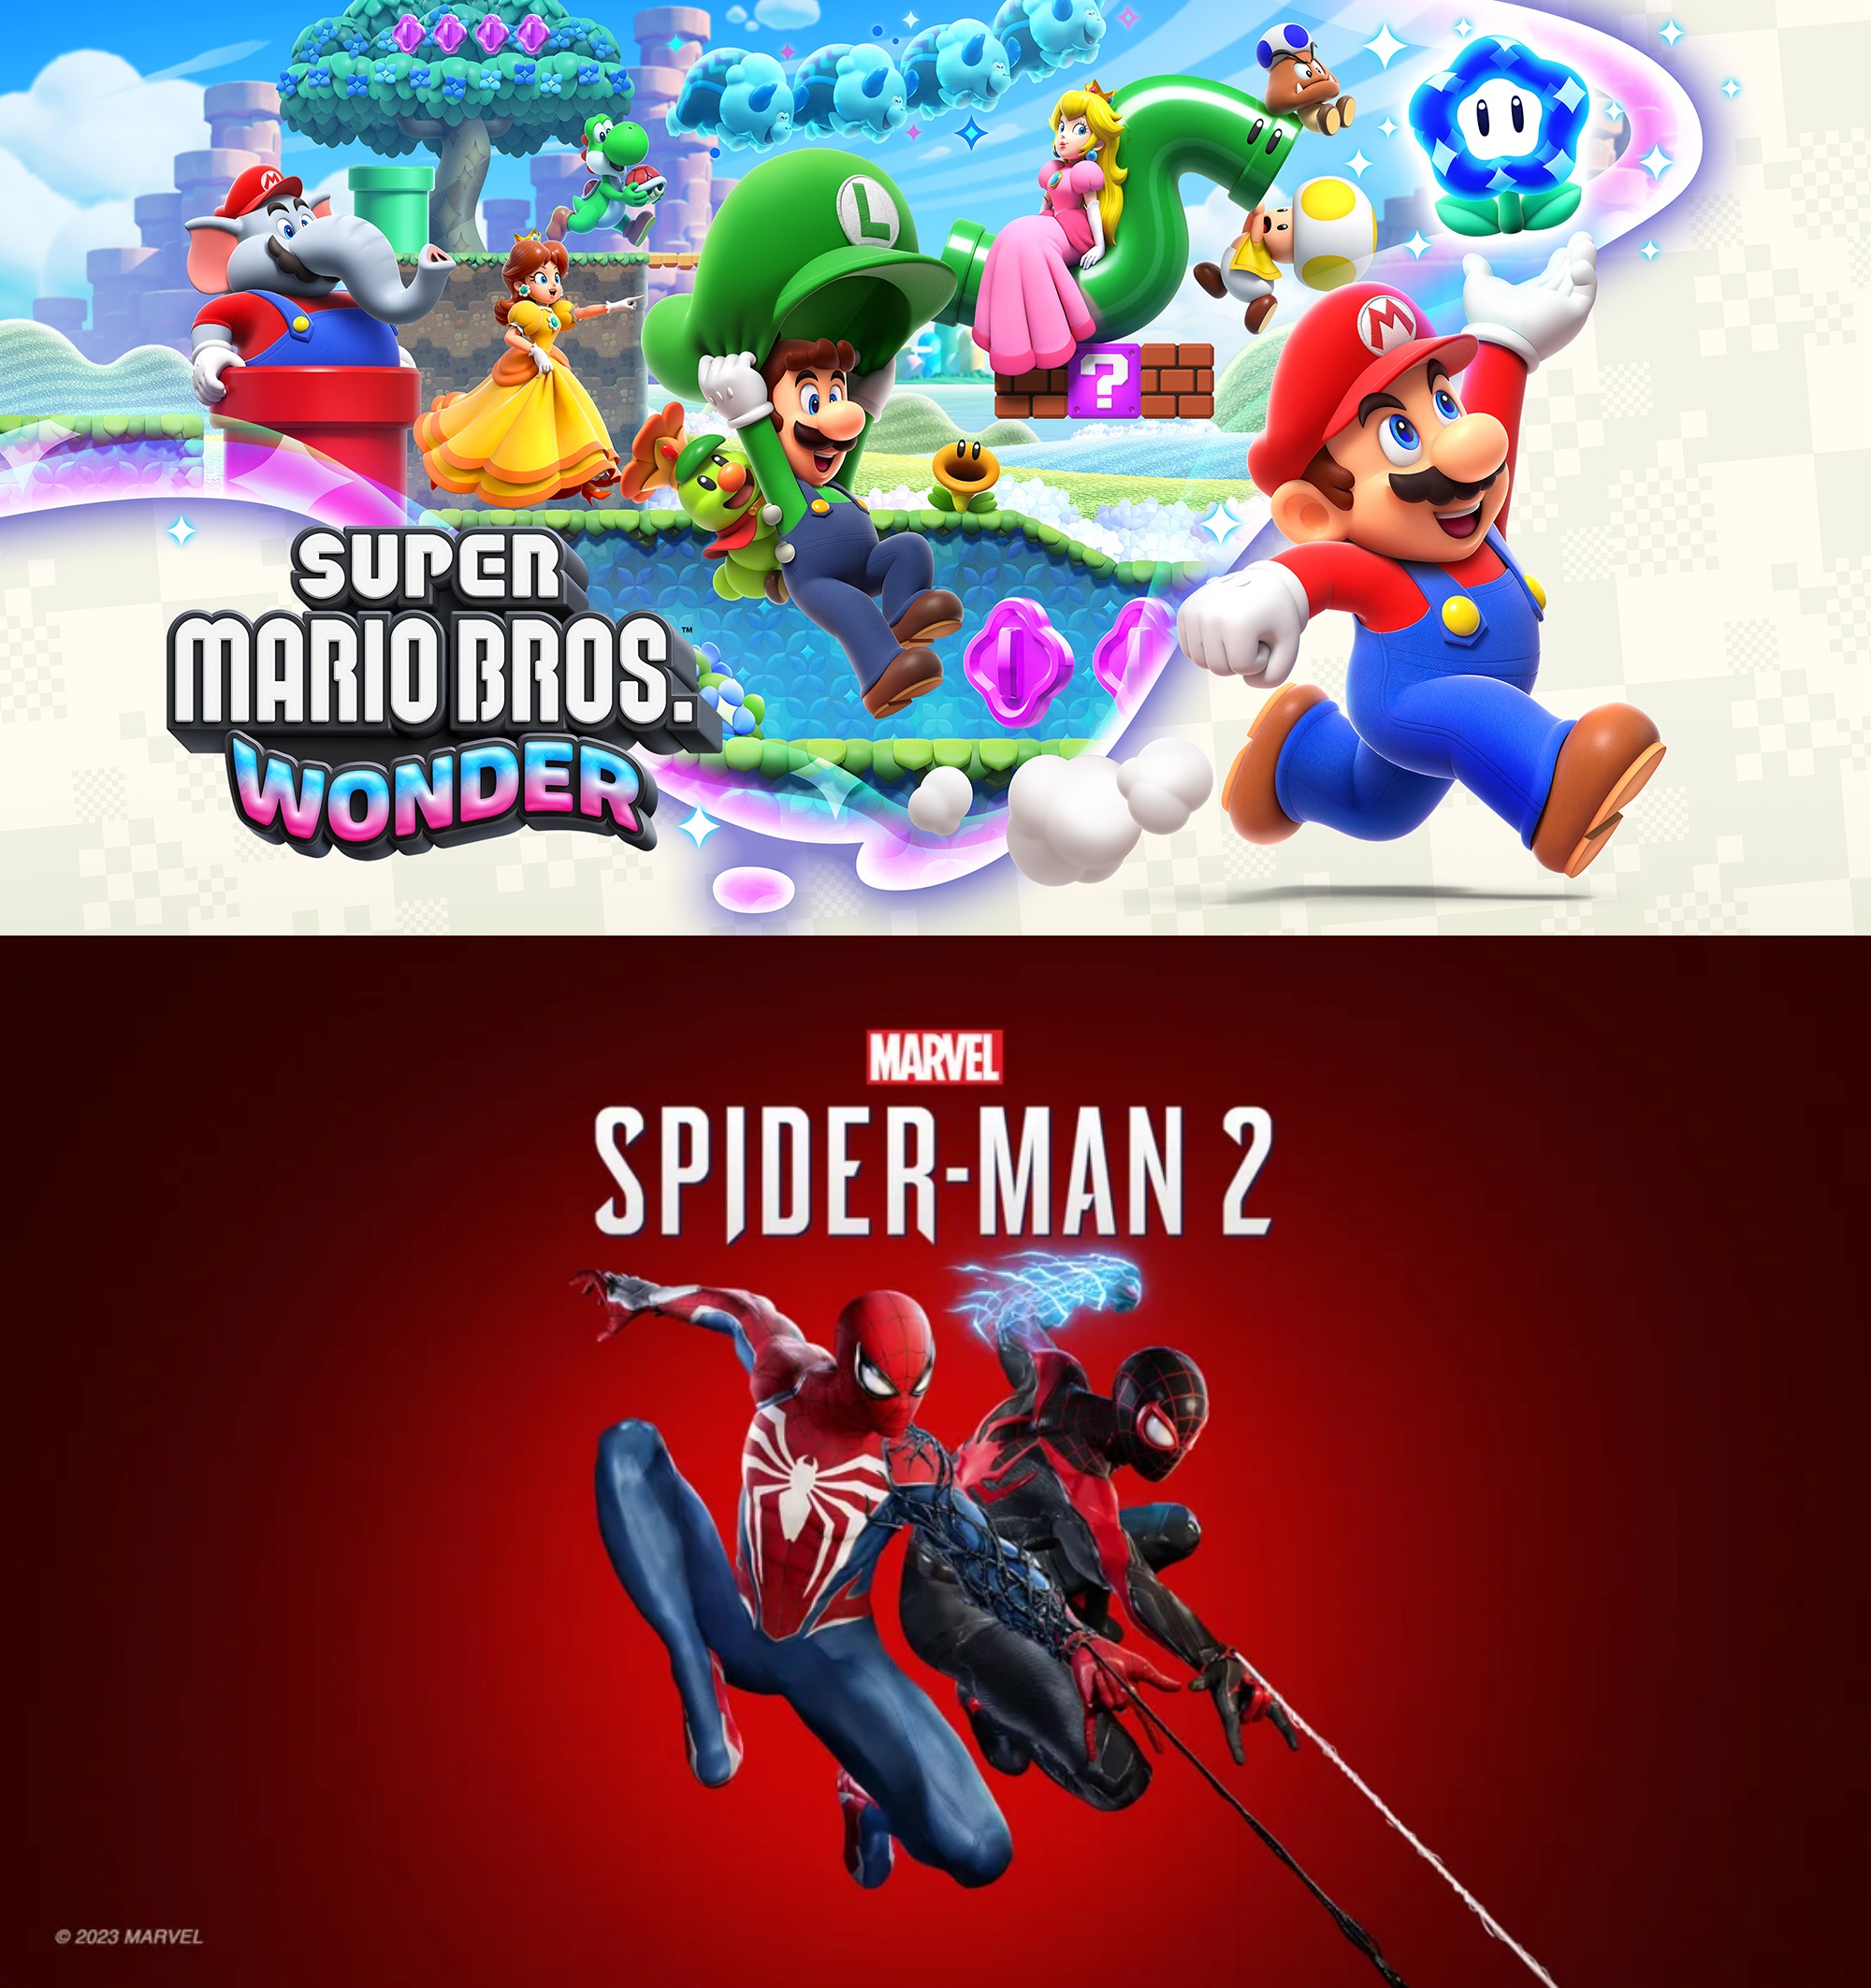 Spider-Man 2 UK boxed sales beat Super Mario Bros. Wonder